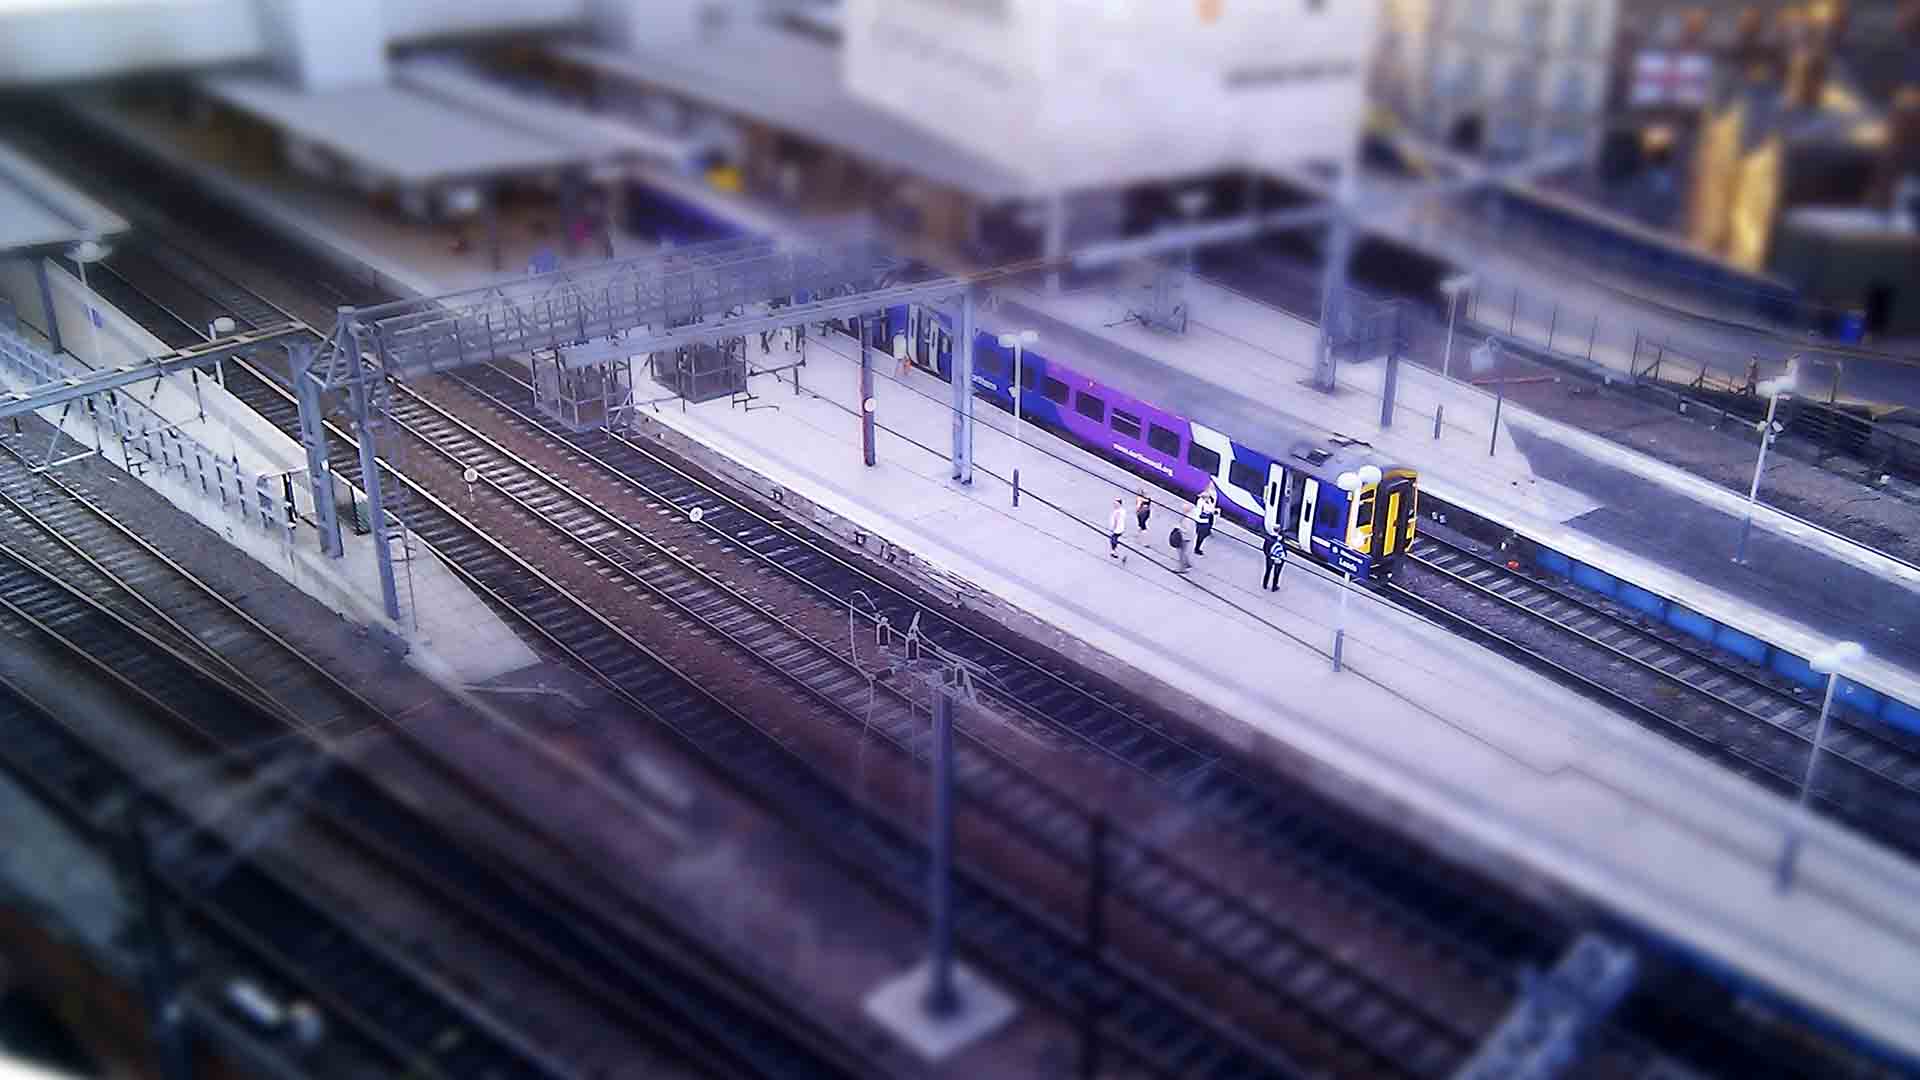 Leeds Station